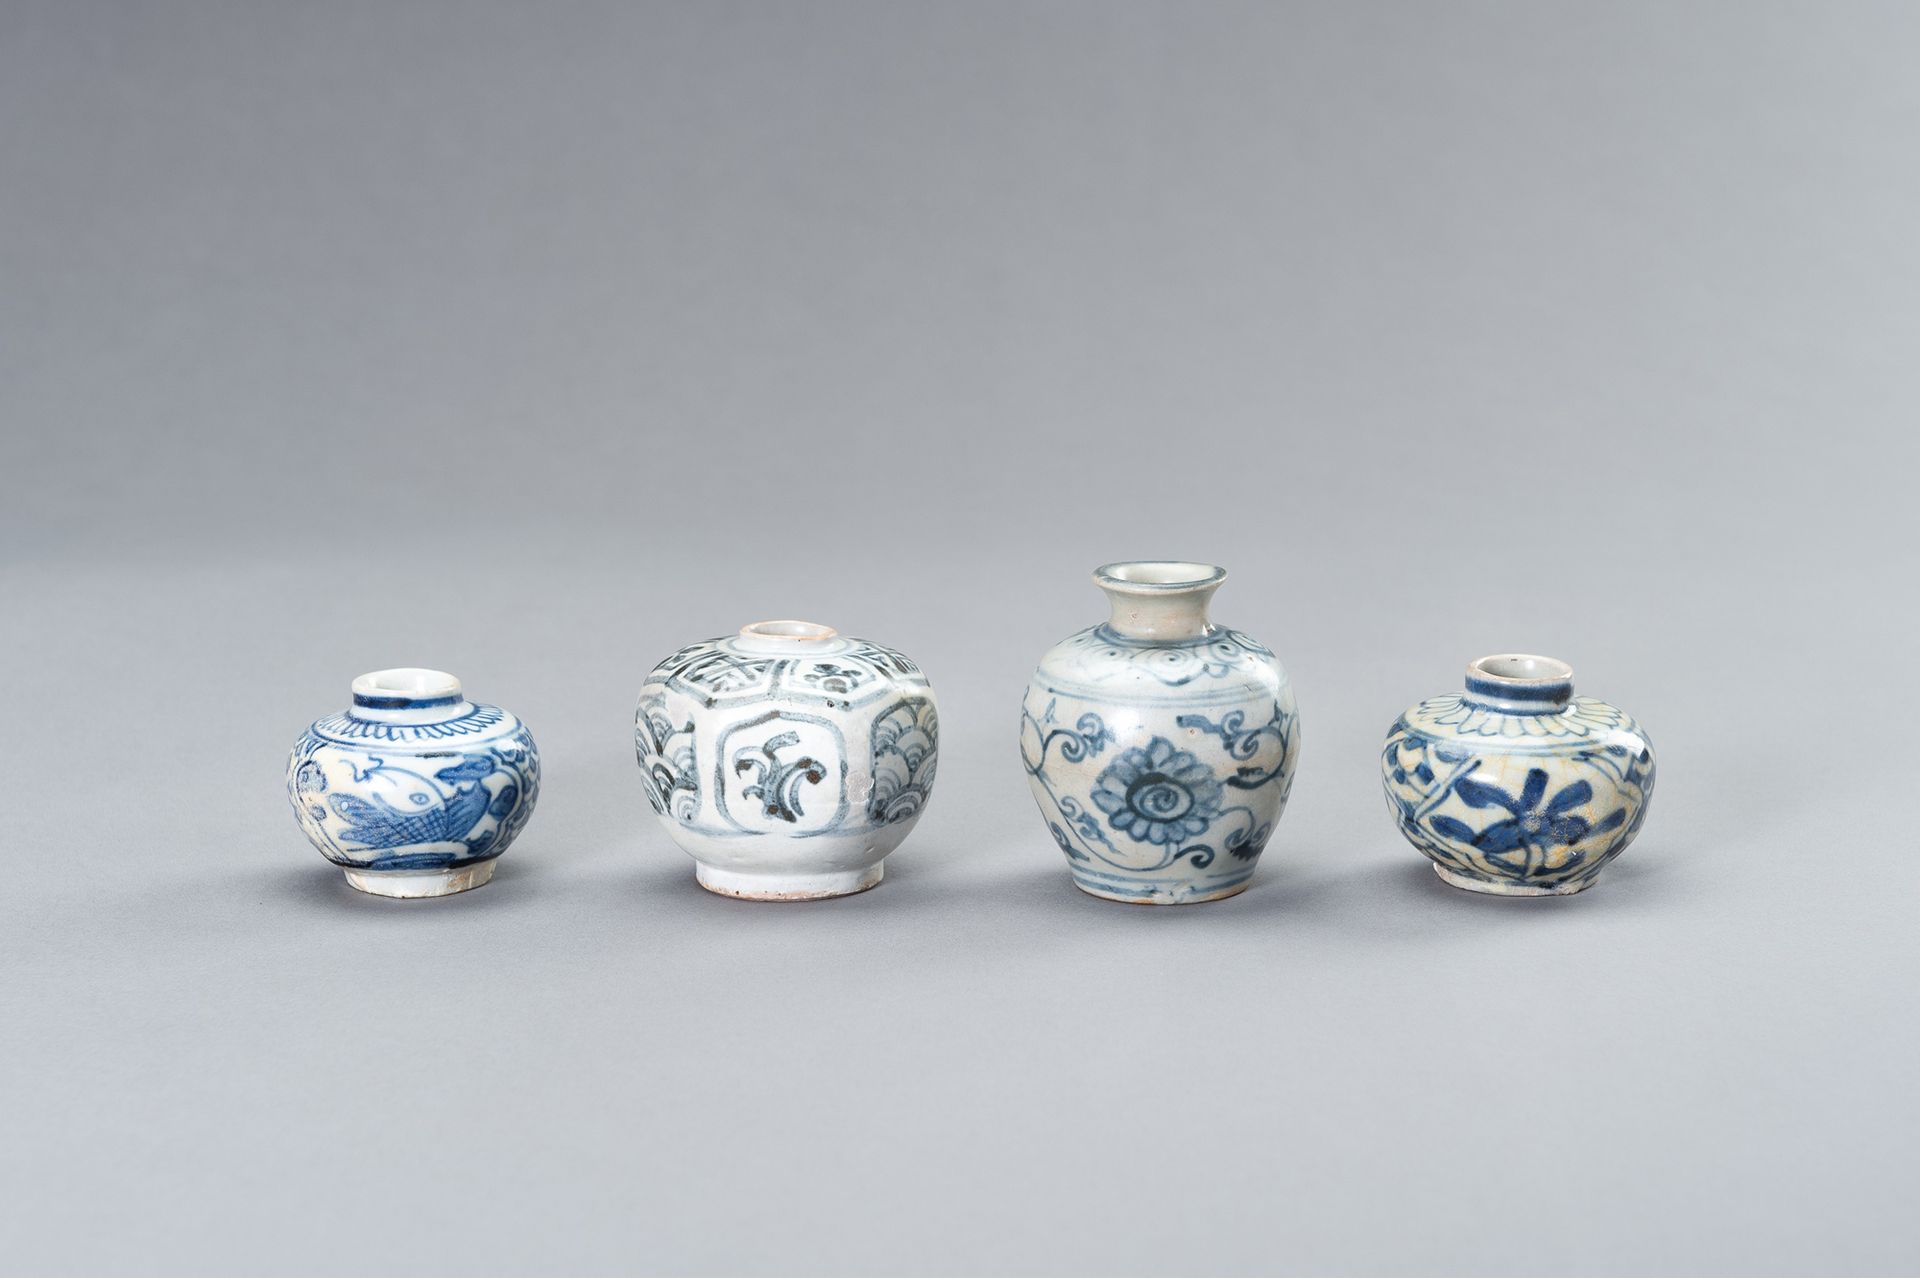 FOUR SMALL BLUE AND WHITE CERAMIC JARS 四件青花瓷小罐子
中国，明朝（1368-1644）。一个六边形的罐子，从短底升起，&hellip;